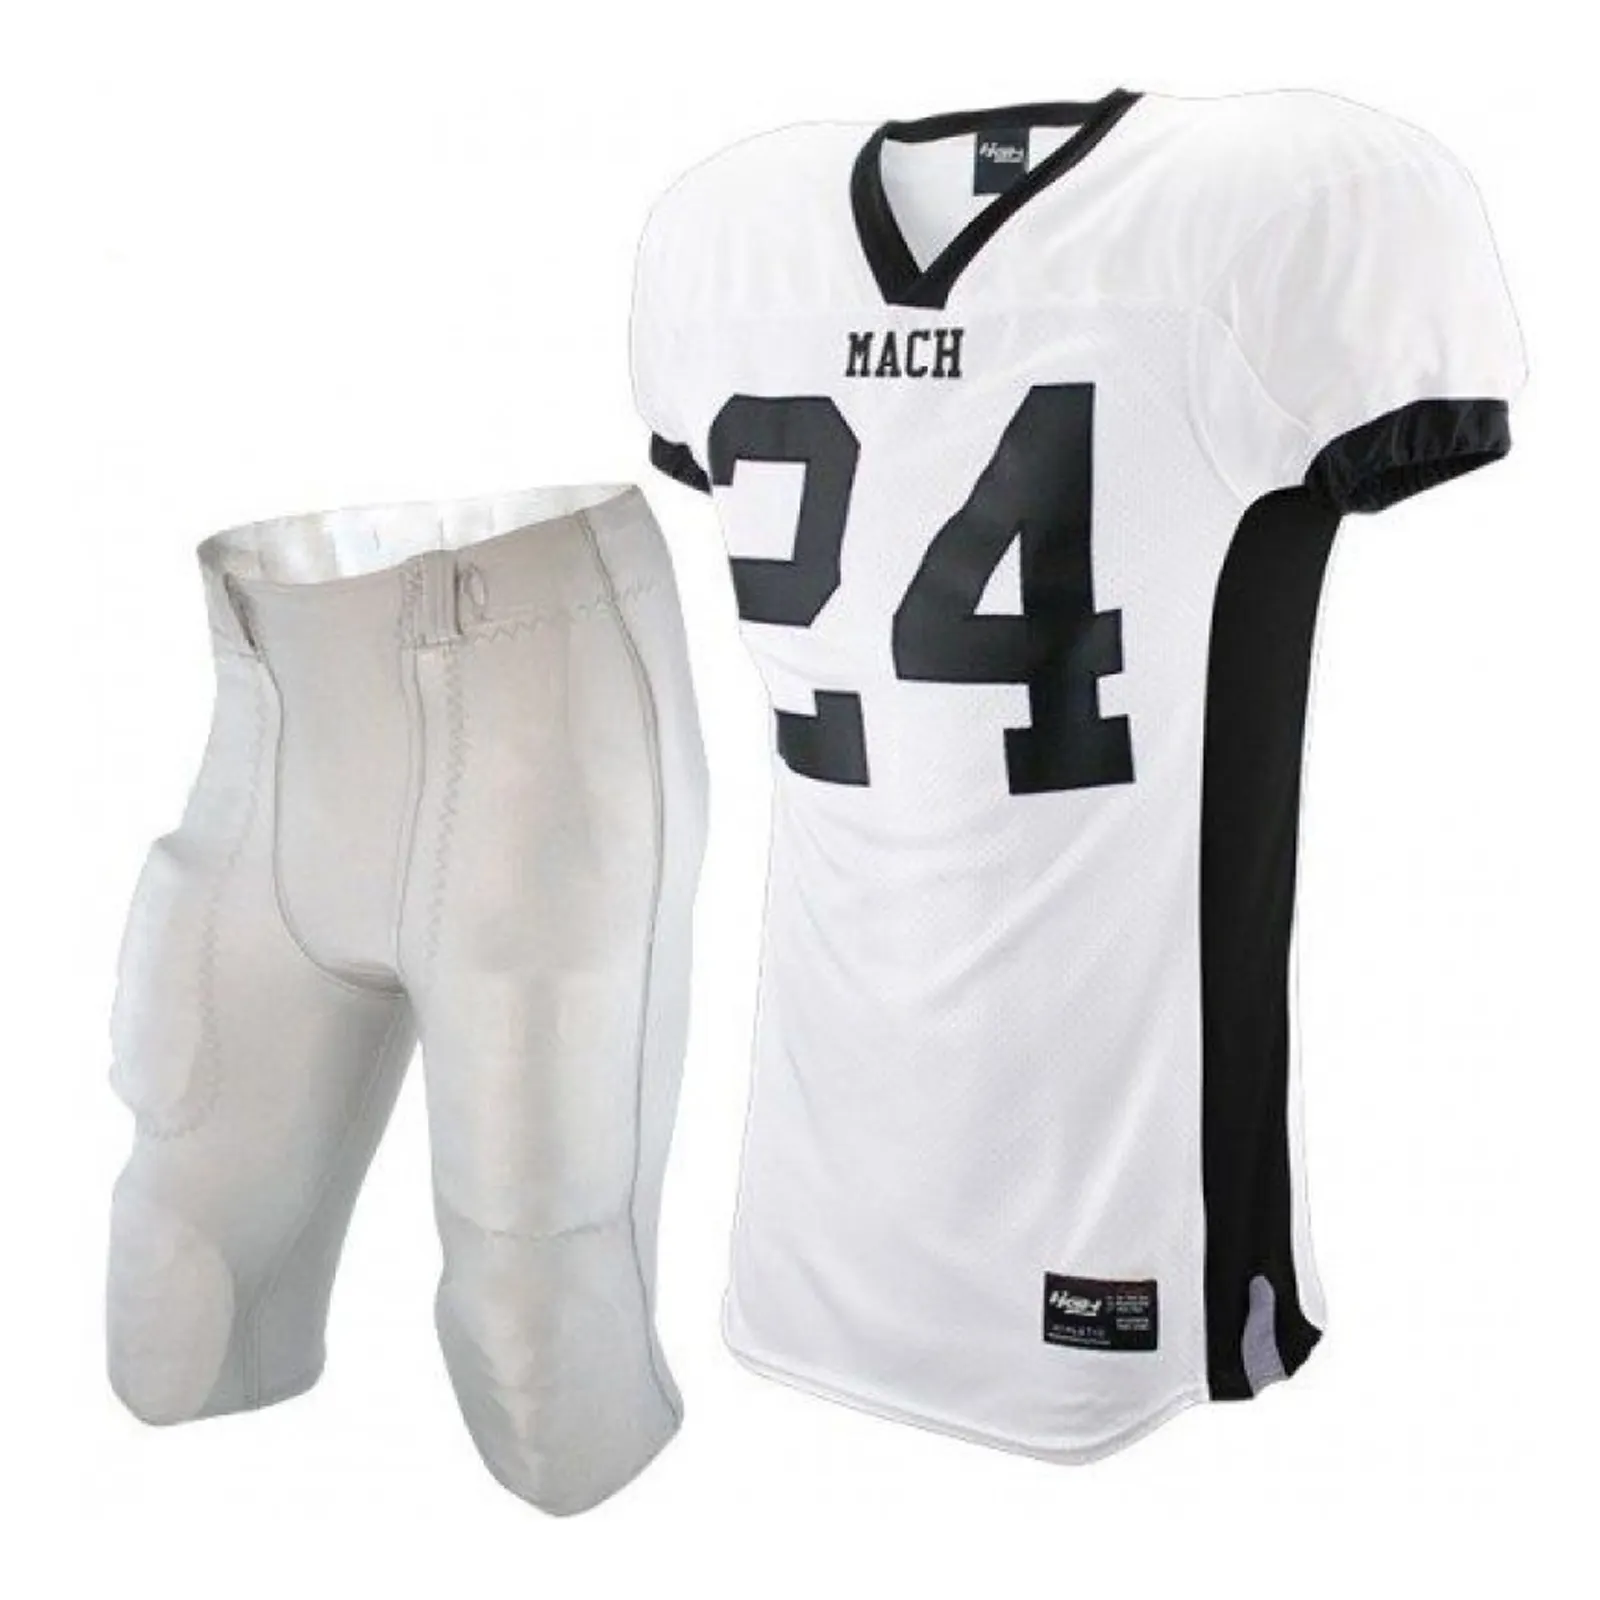 American Footballer Men's Fancy Dress Costume The American Football Player's Sportswear Instrumentation Football Equipment